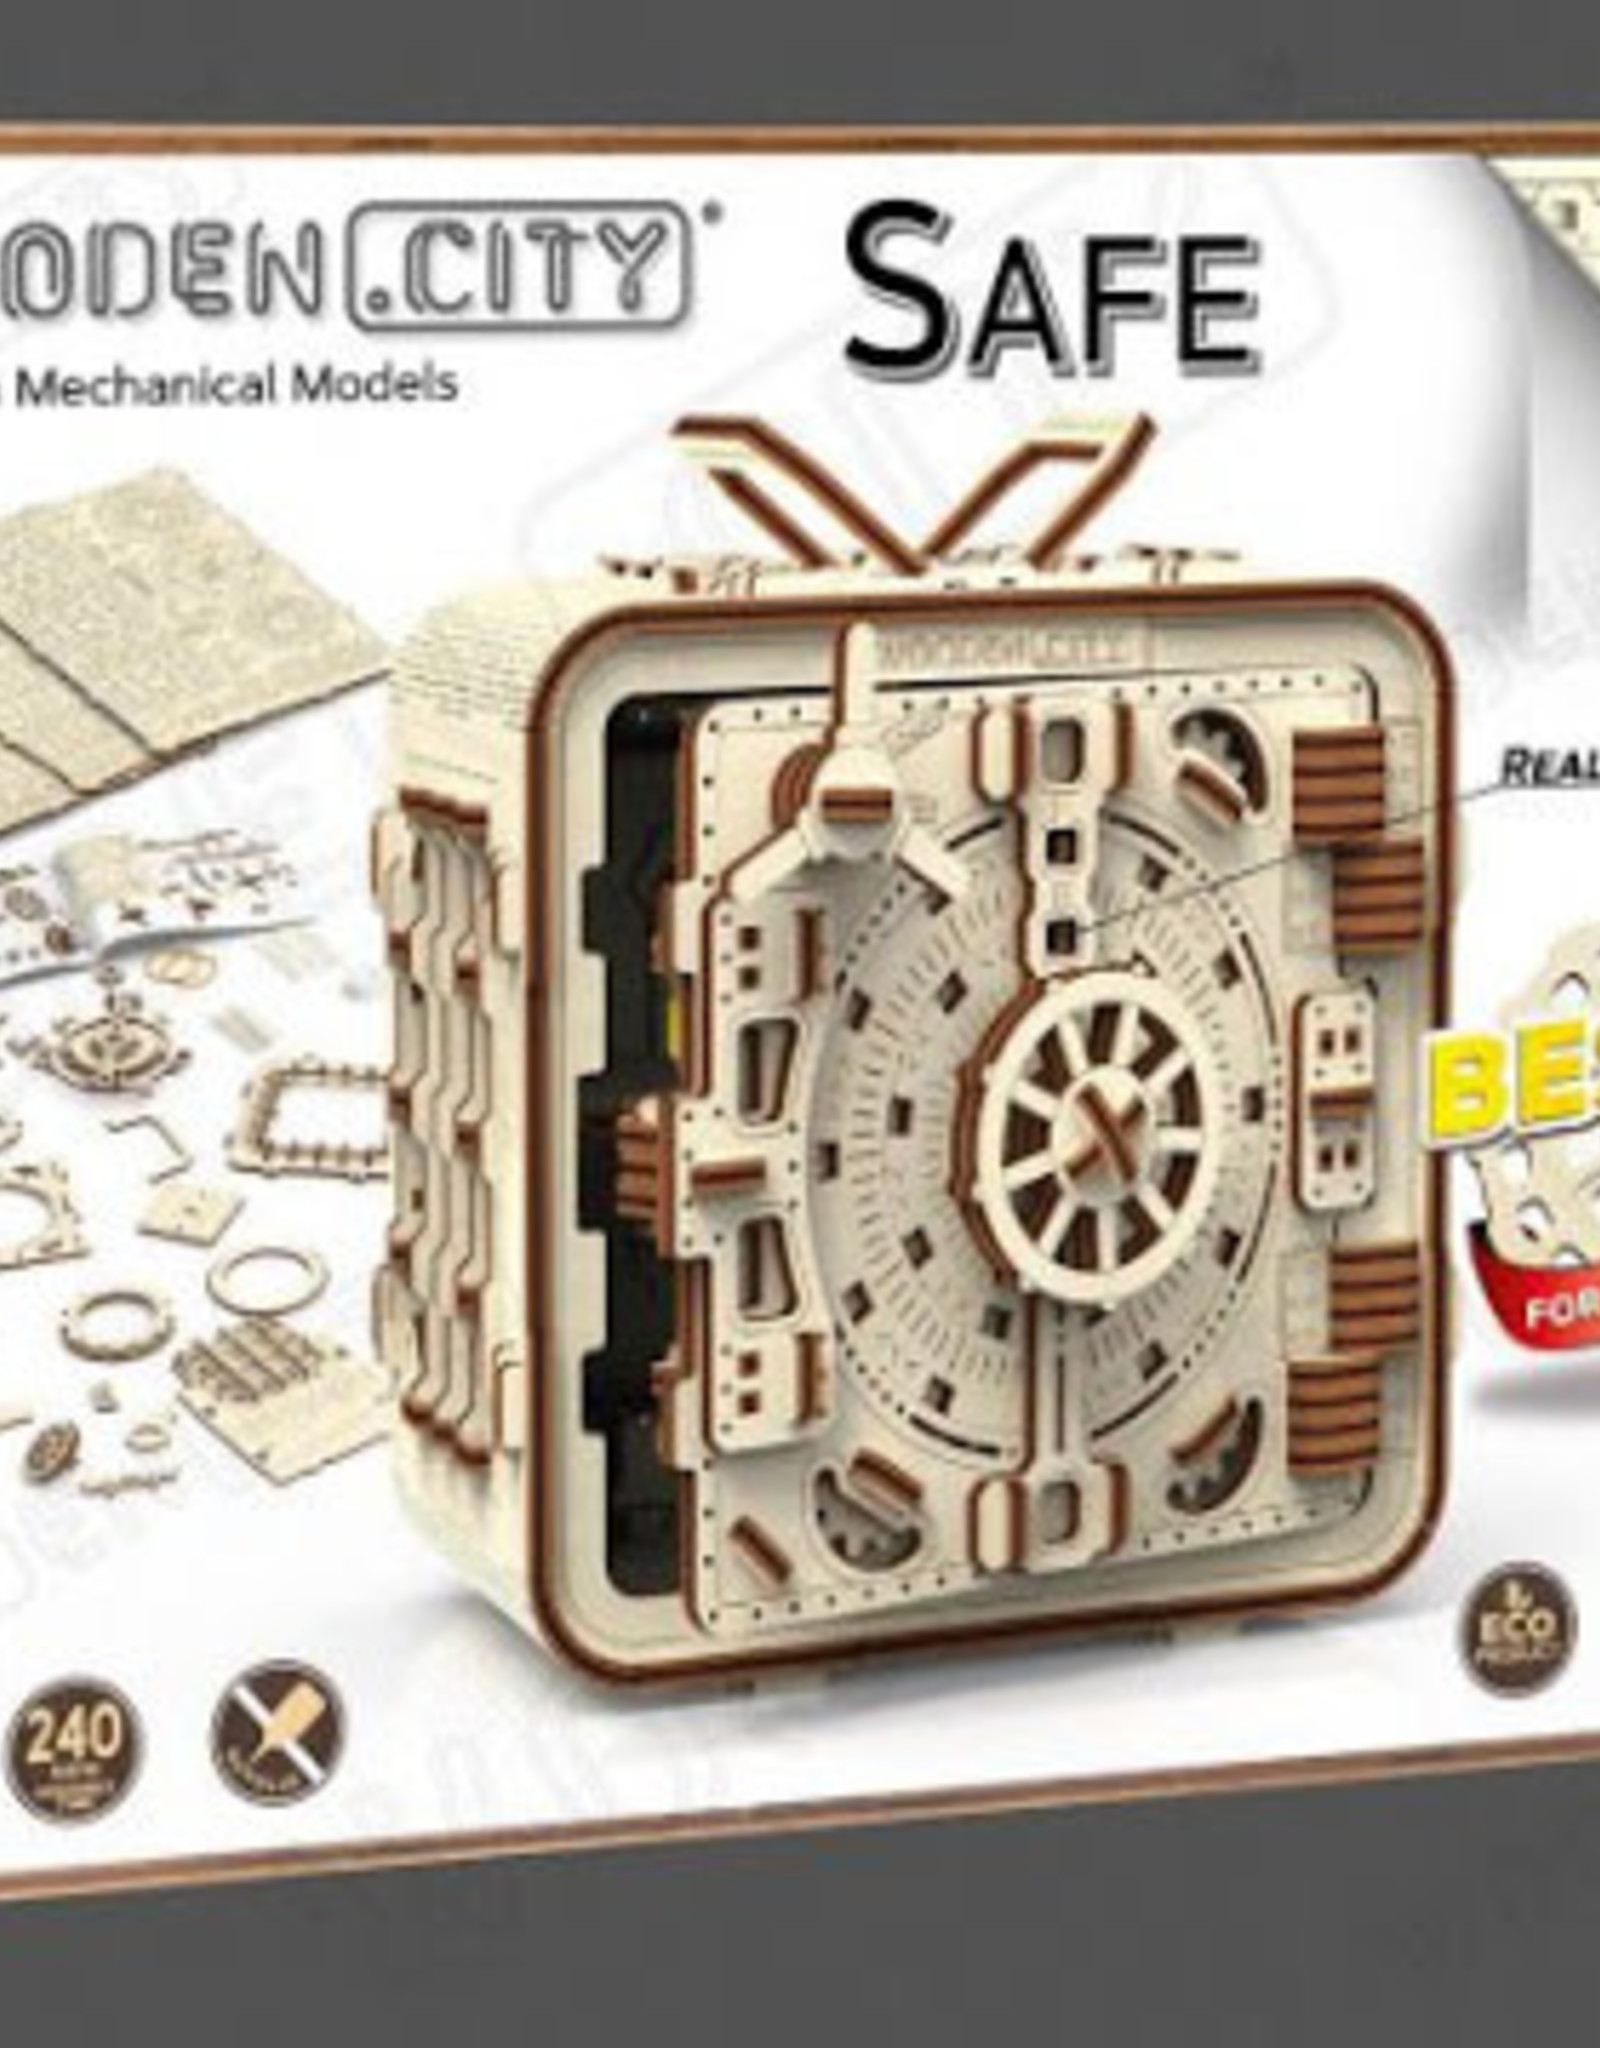 Wooden City Wooden City Safe